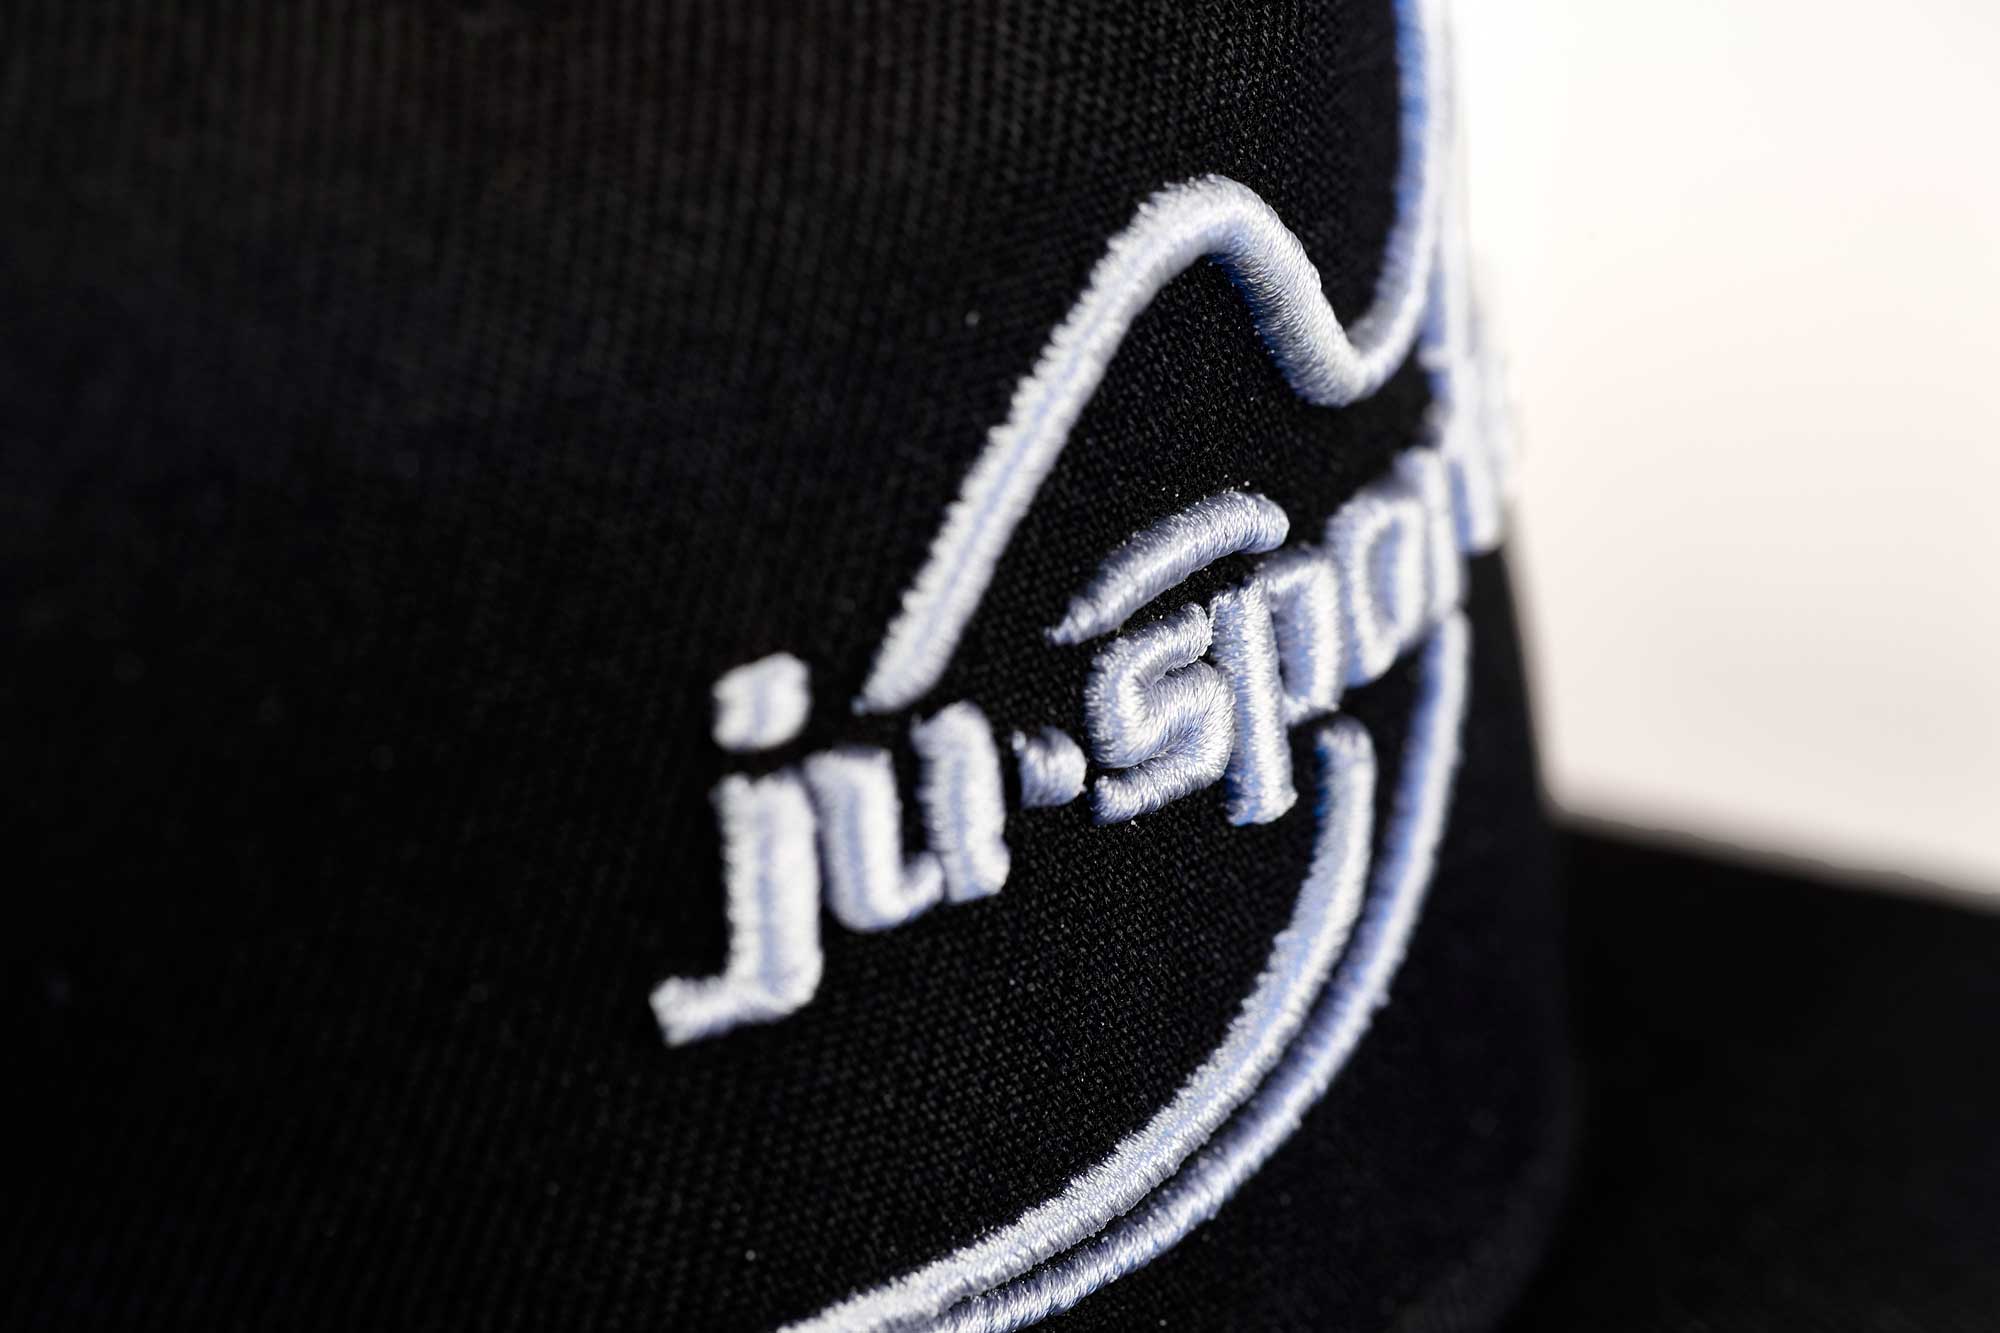 Ju-Sports 5 Buckle Logo Cap 3D black